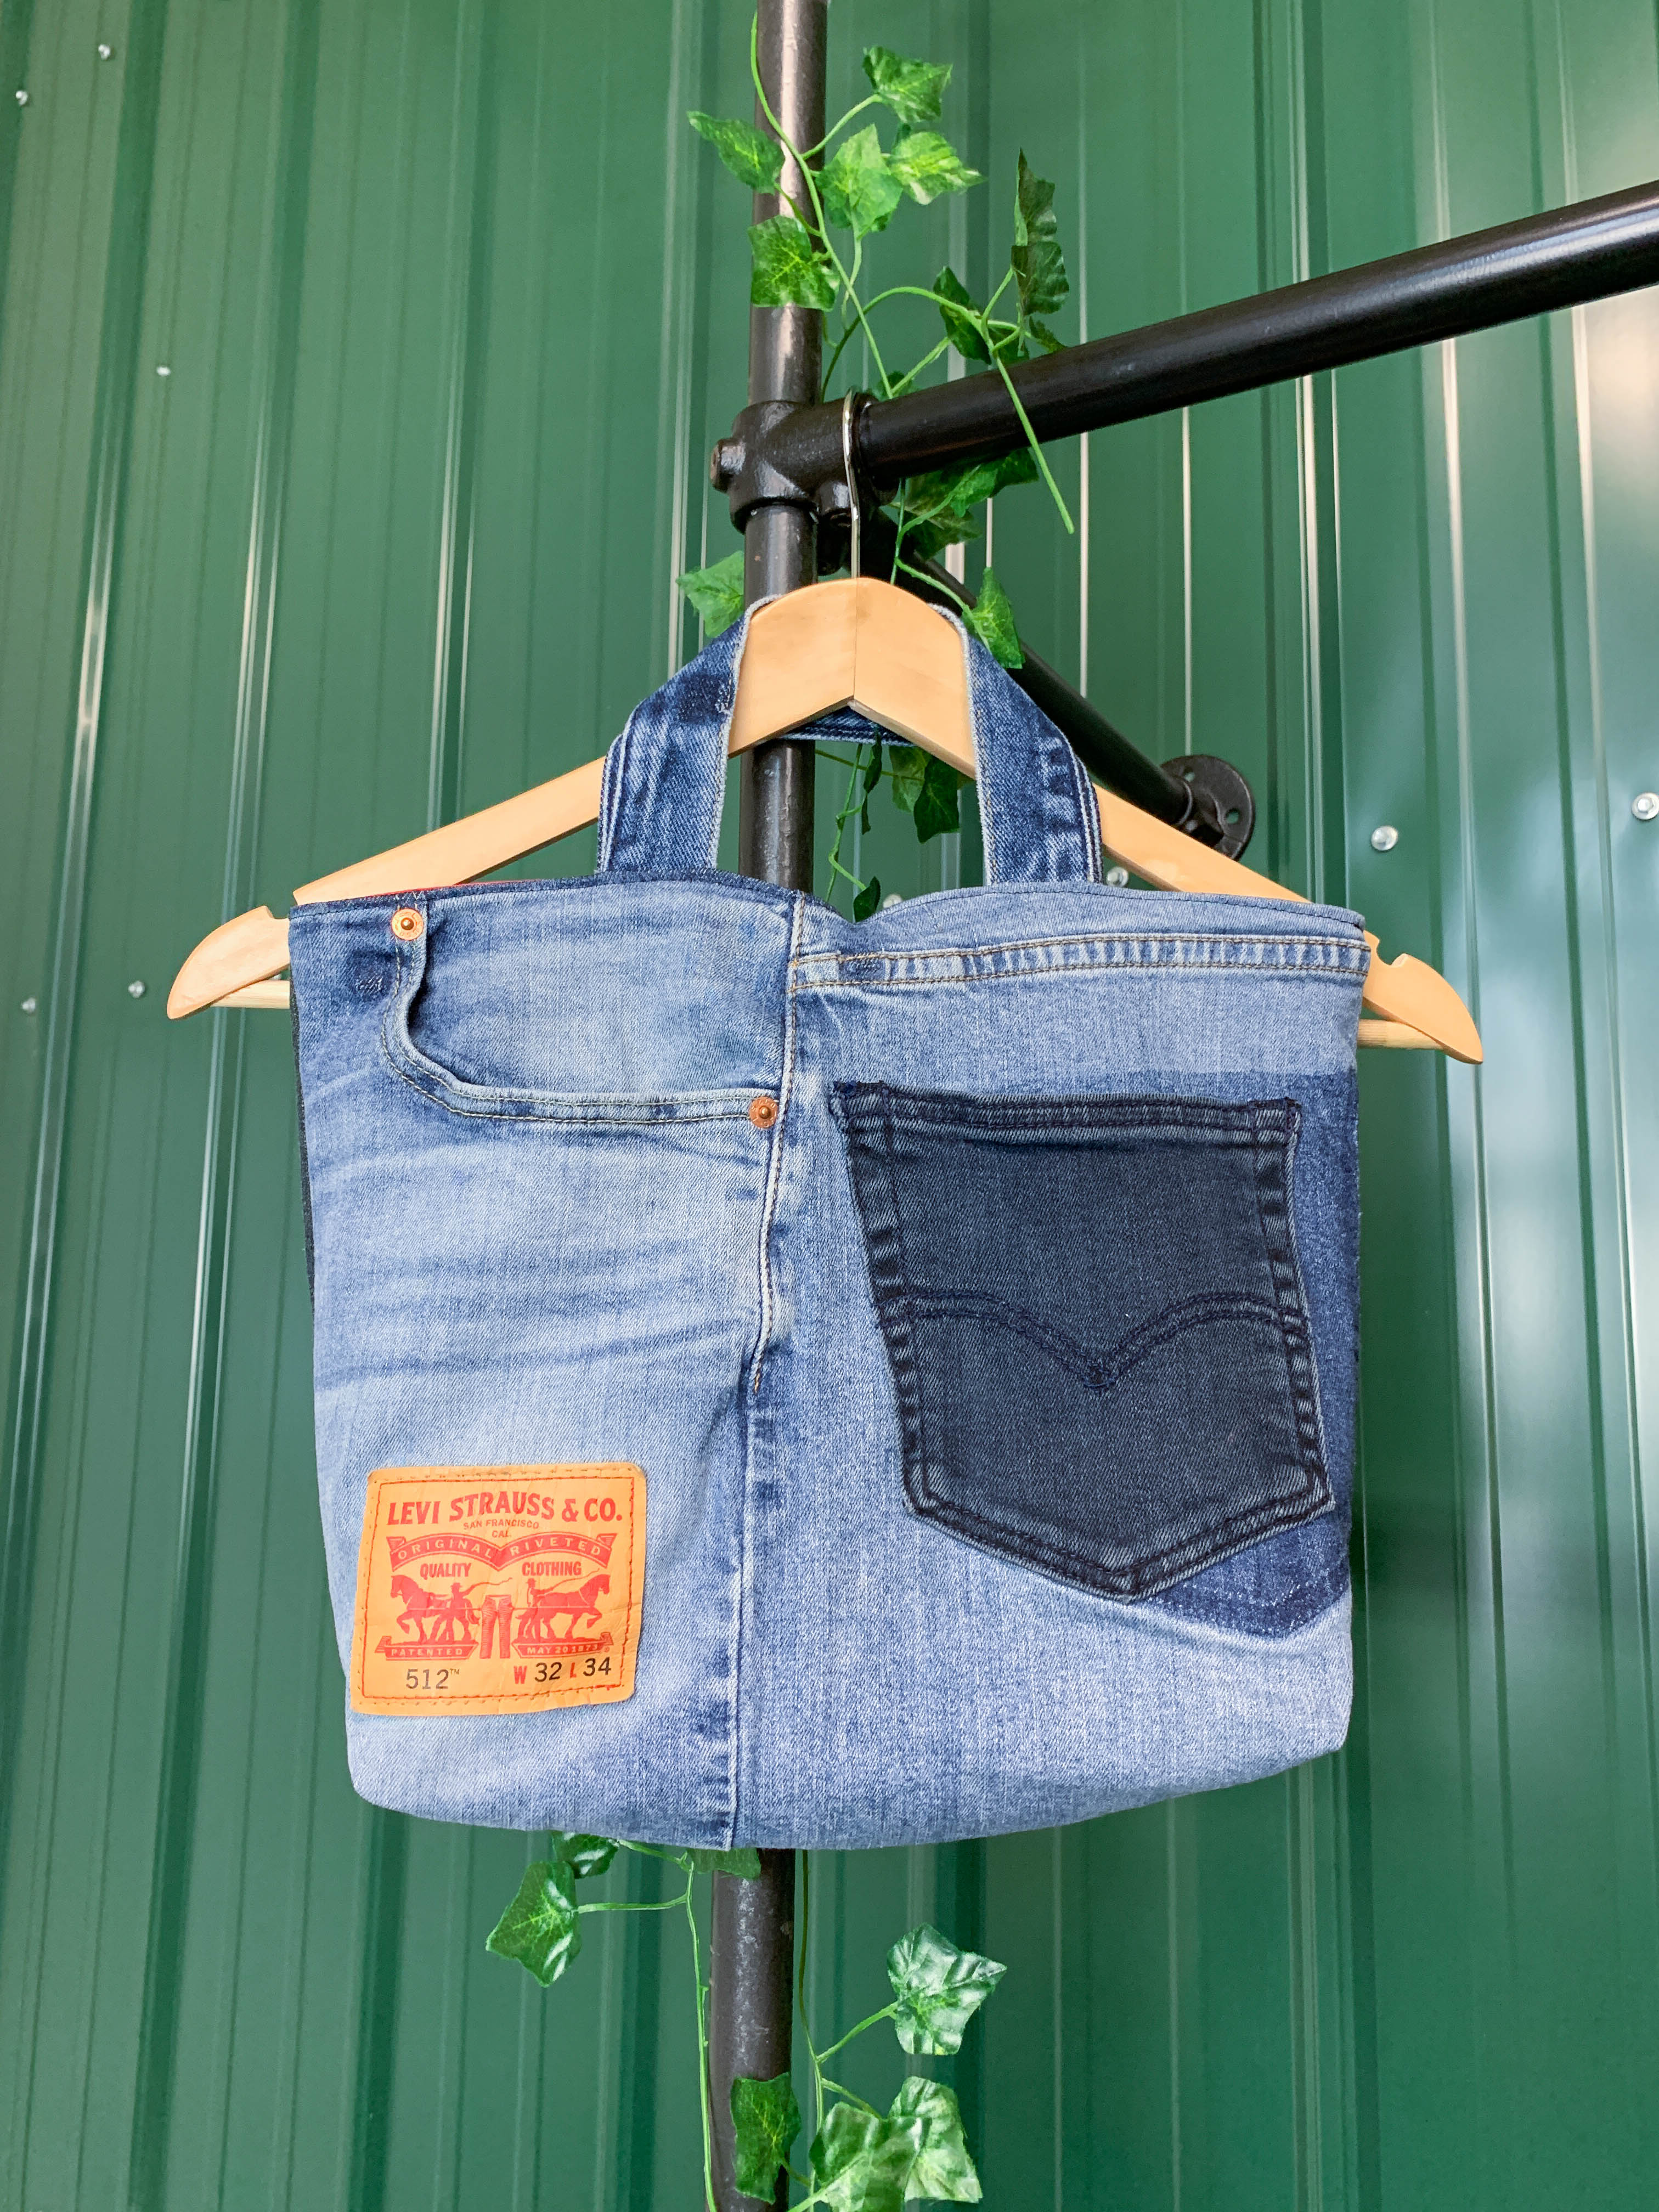 Patchwork denim LV bag  Denim handbags, Bags, Upcycle jeans